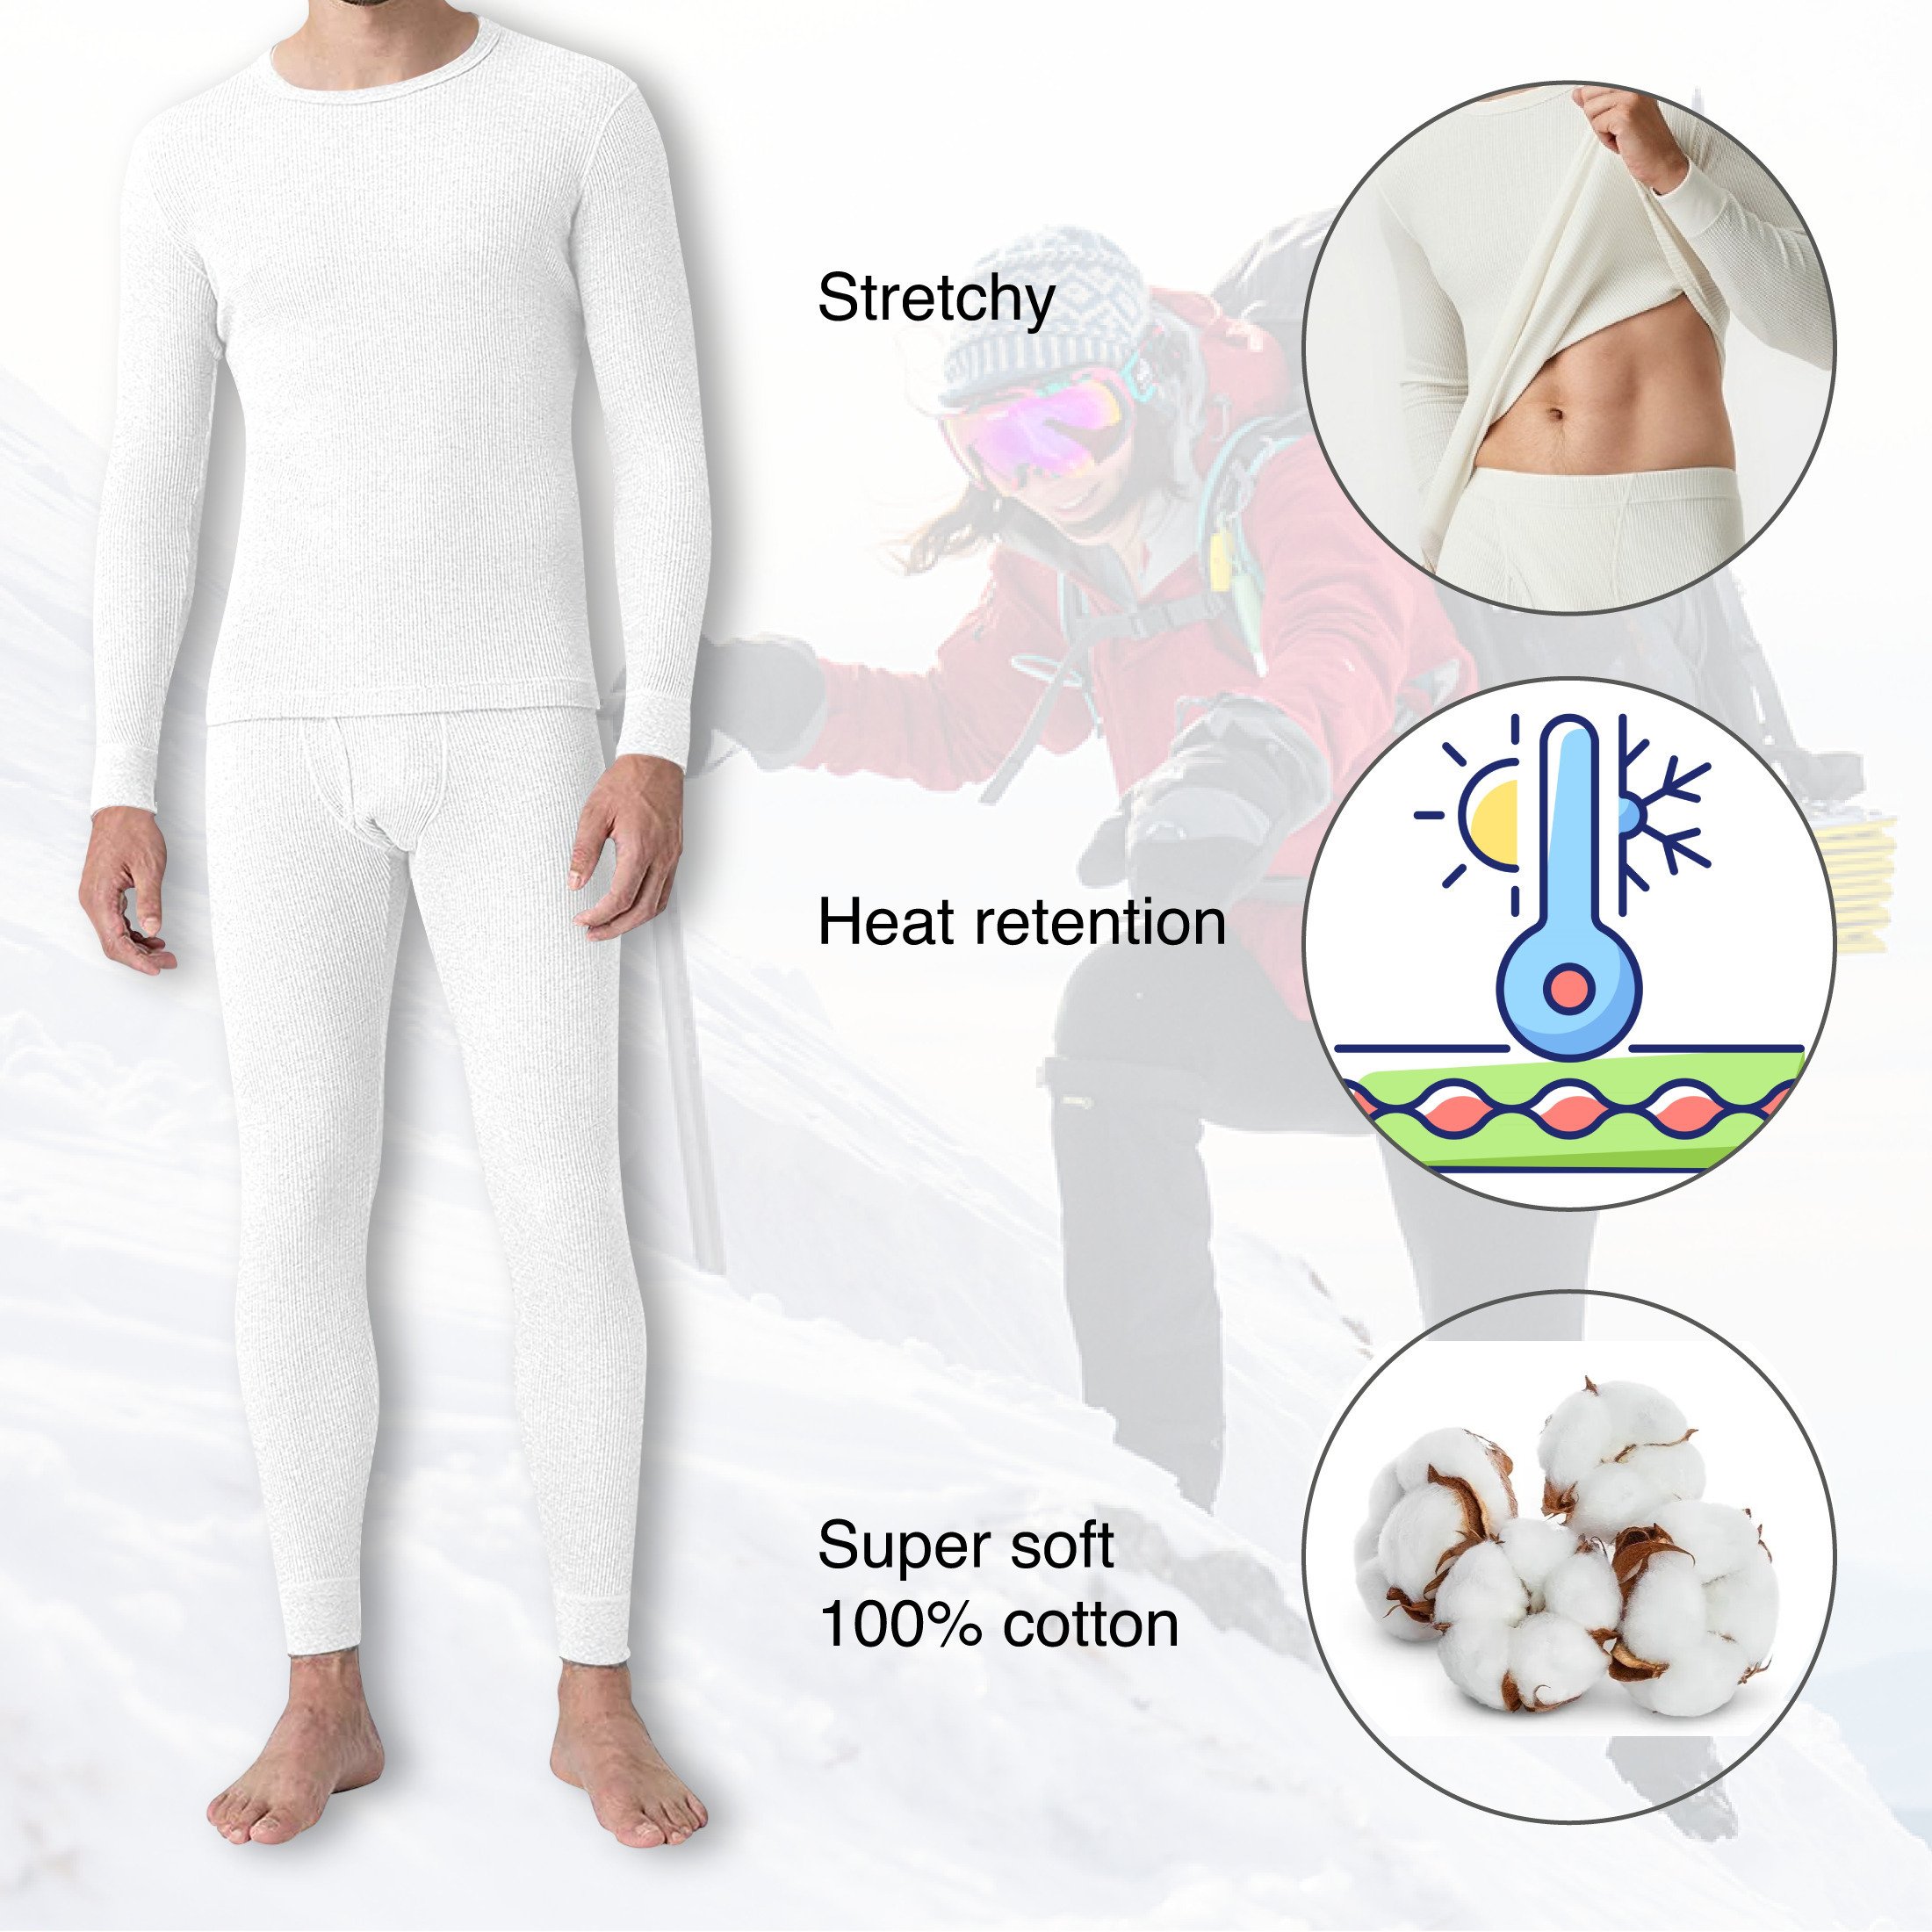 2-Sets: Men's Super Soft Cotton Waffle Knit Winter Thermal Underwear Set - Black & White, Medium